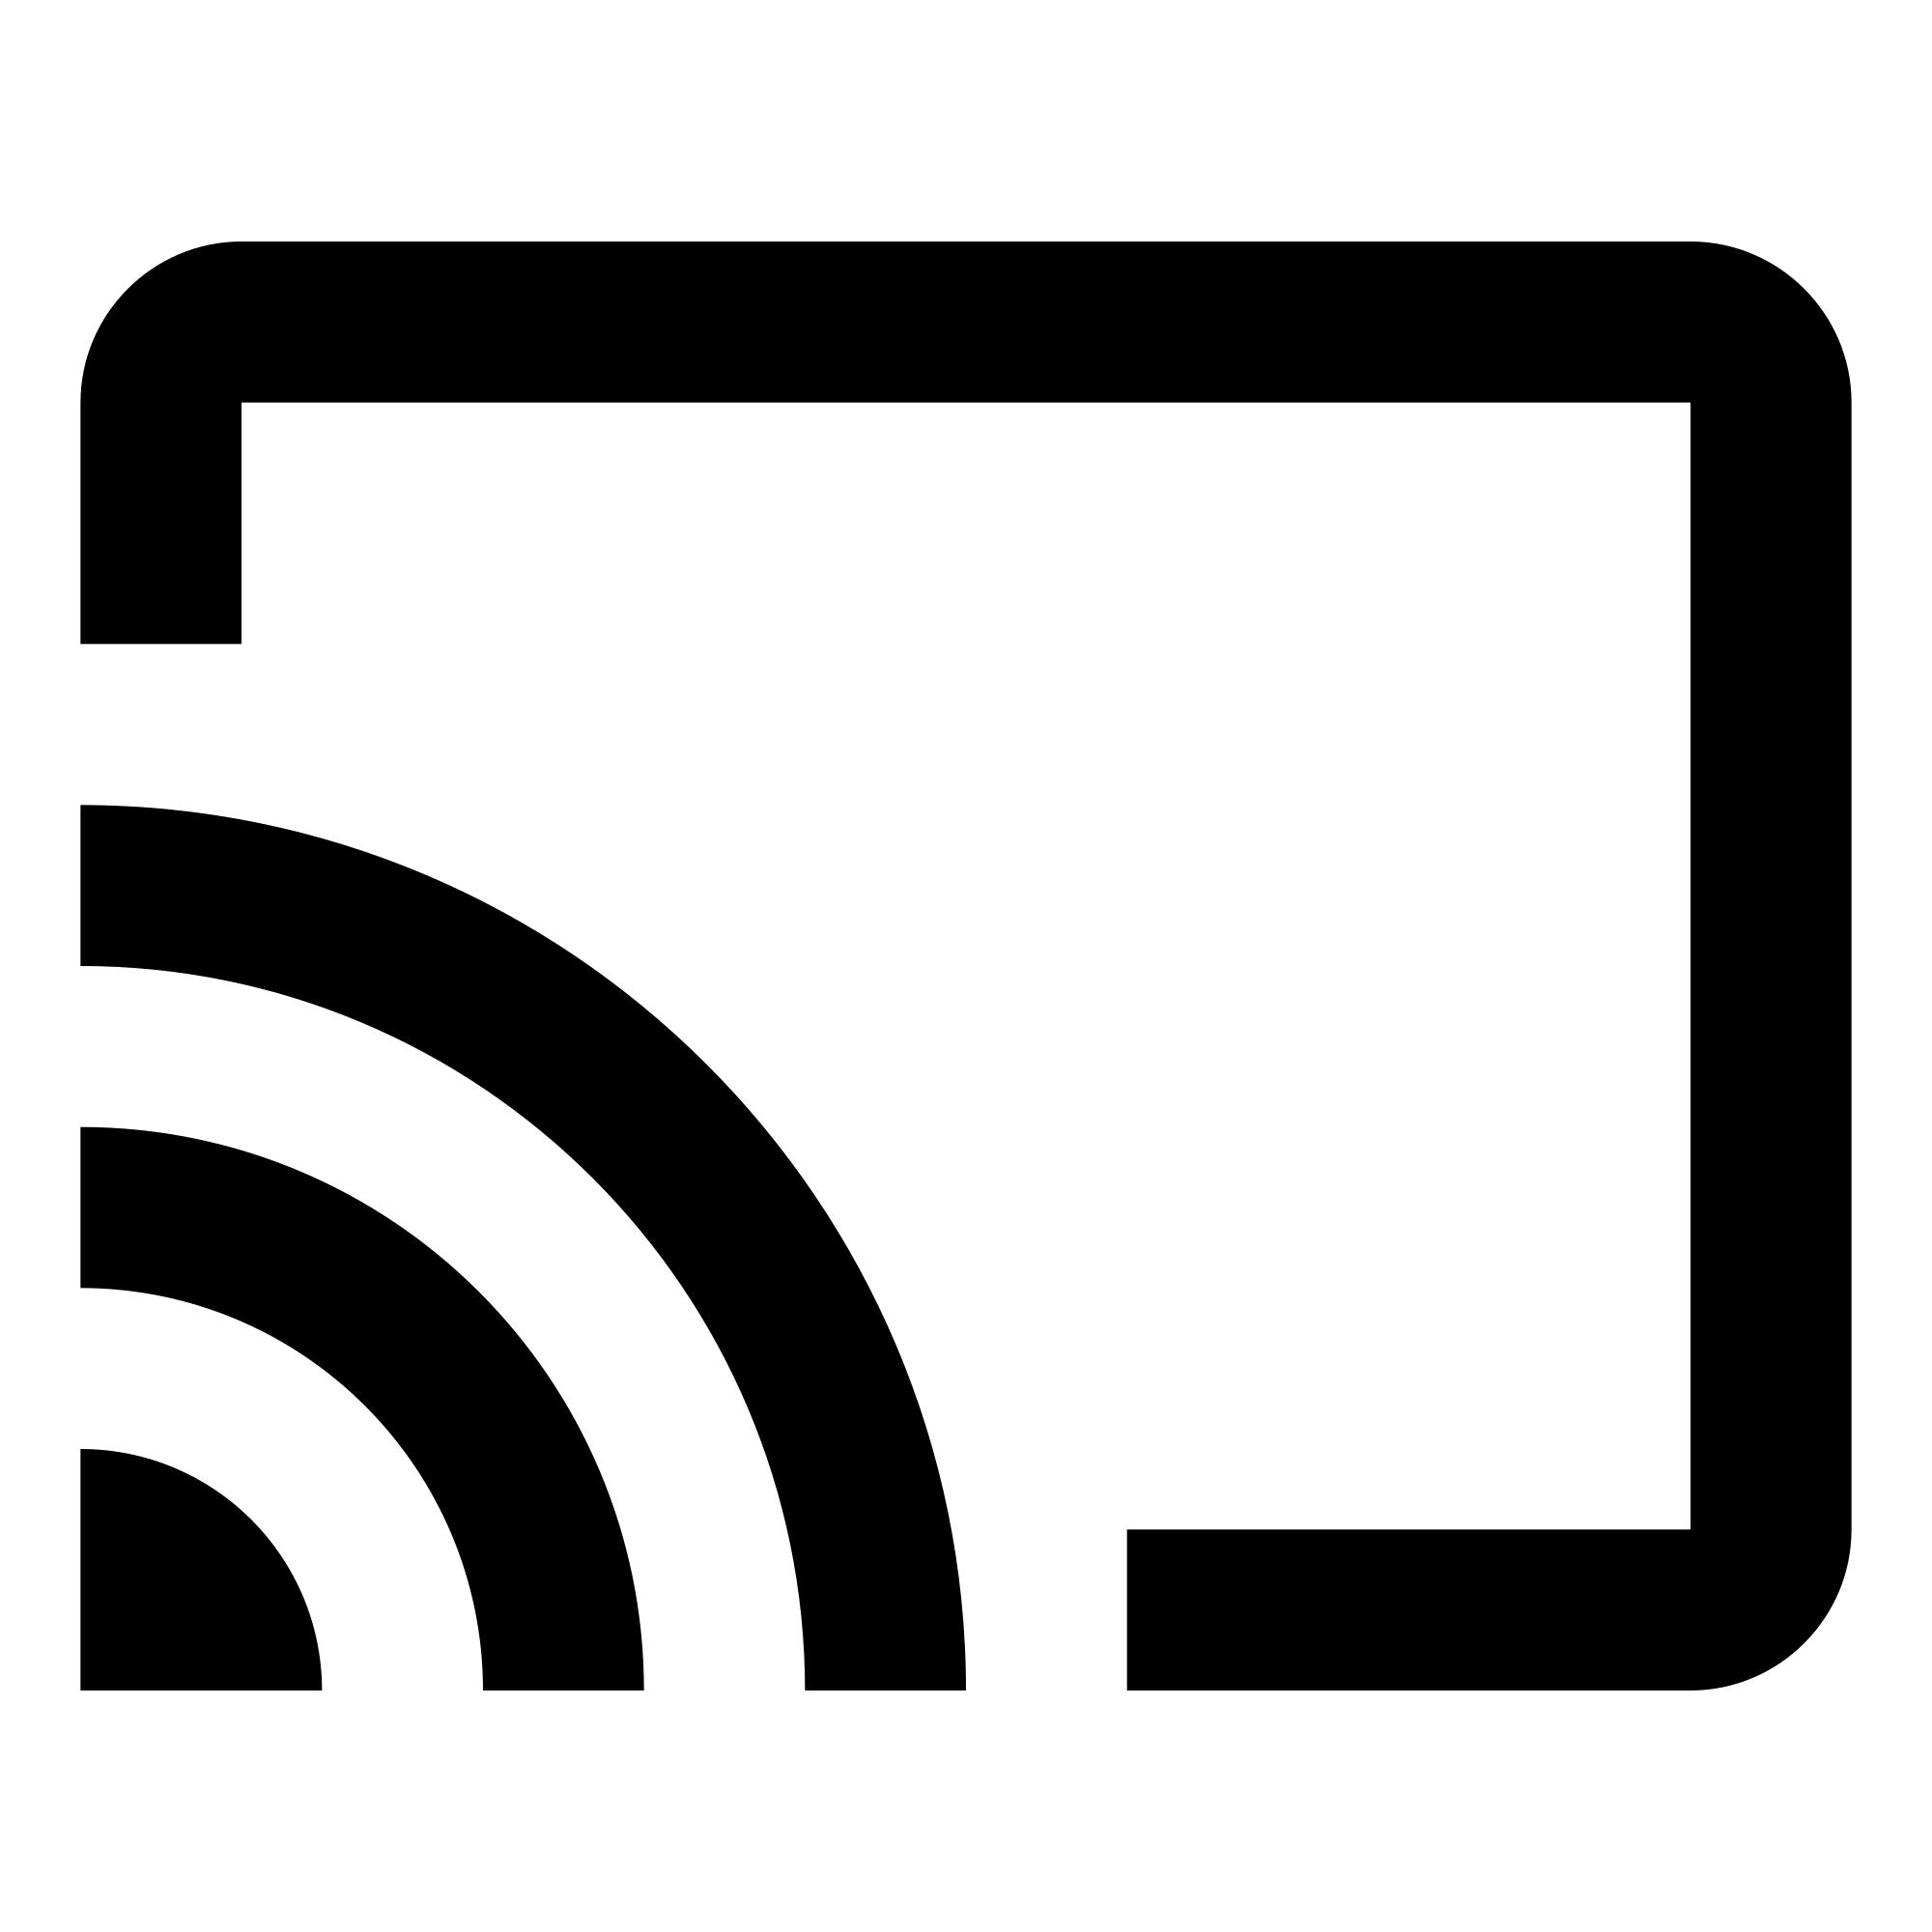 Chrome TV Logo - File:Chromecast cast button icon.svg - Wikimedia Commons